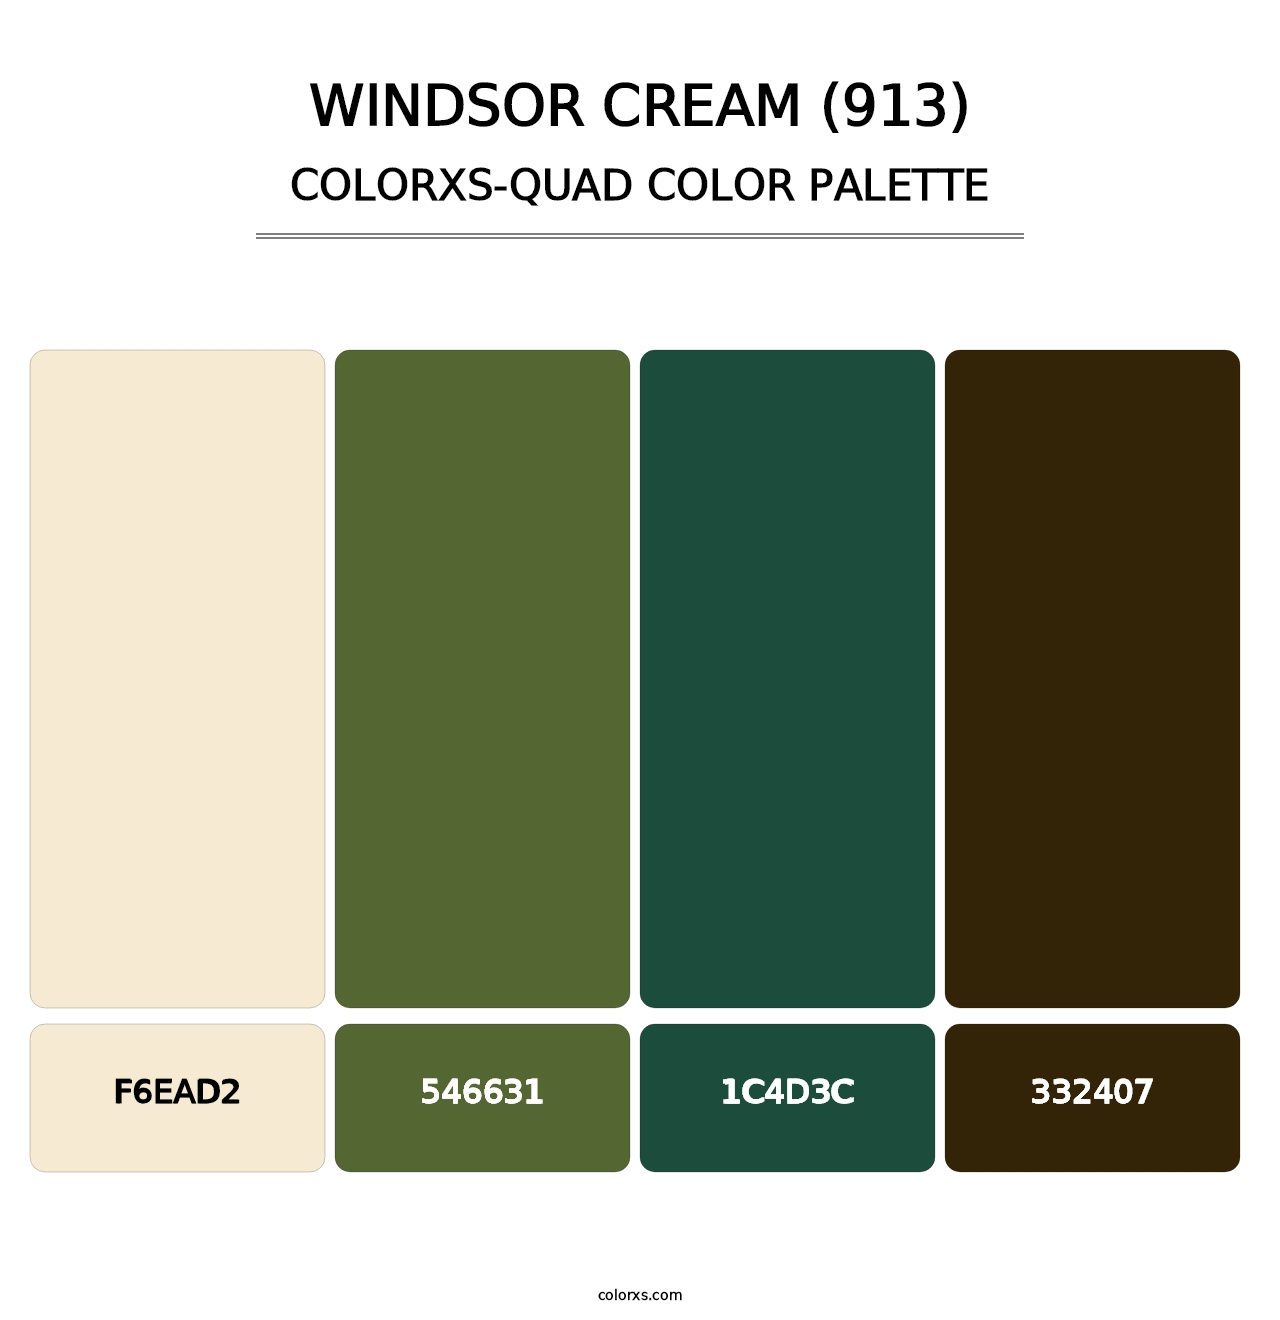 Windsor Cream (913) - Colorxs Quad Palette